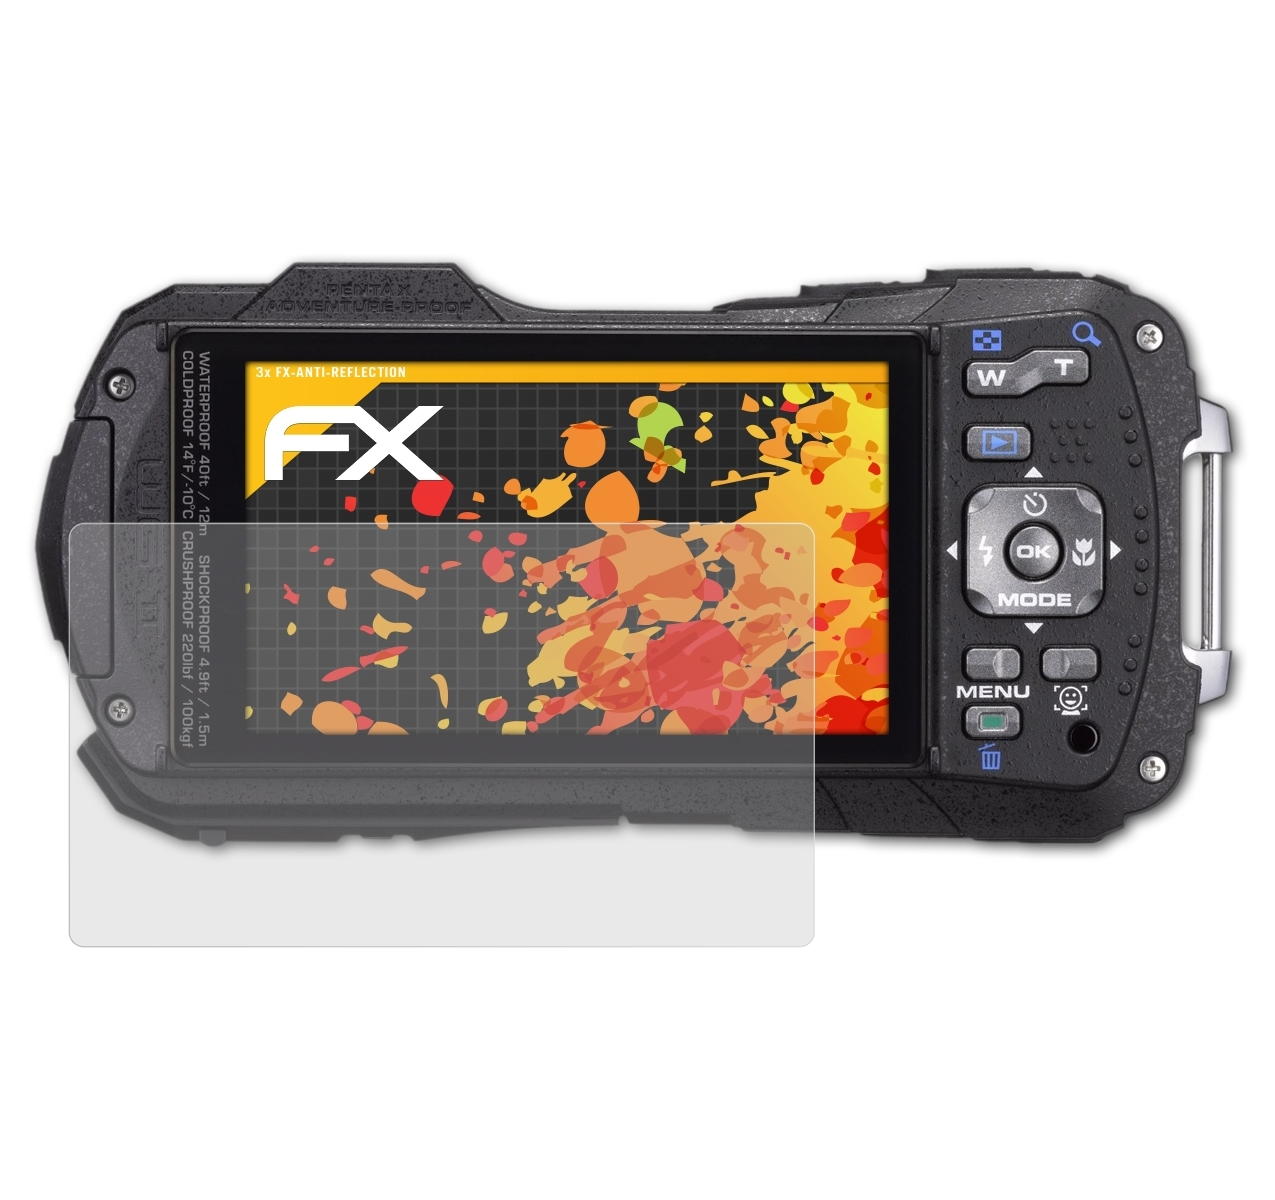 ATFOLIX 3x FX-Antireflex / WG-2 Pentax WG-2 Displayschutz(für Optio GPS)